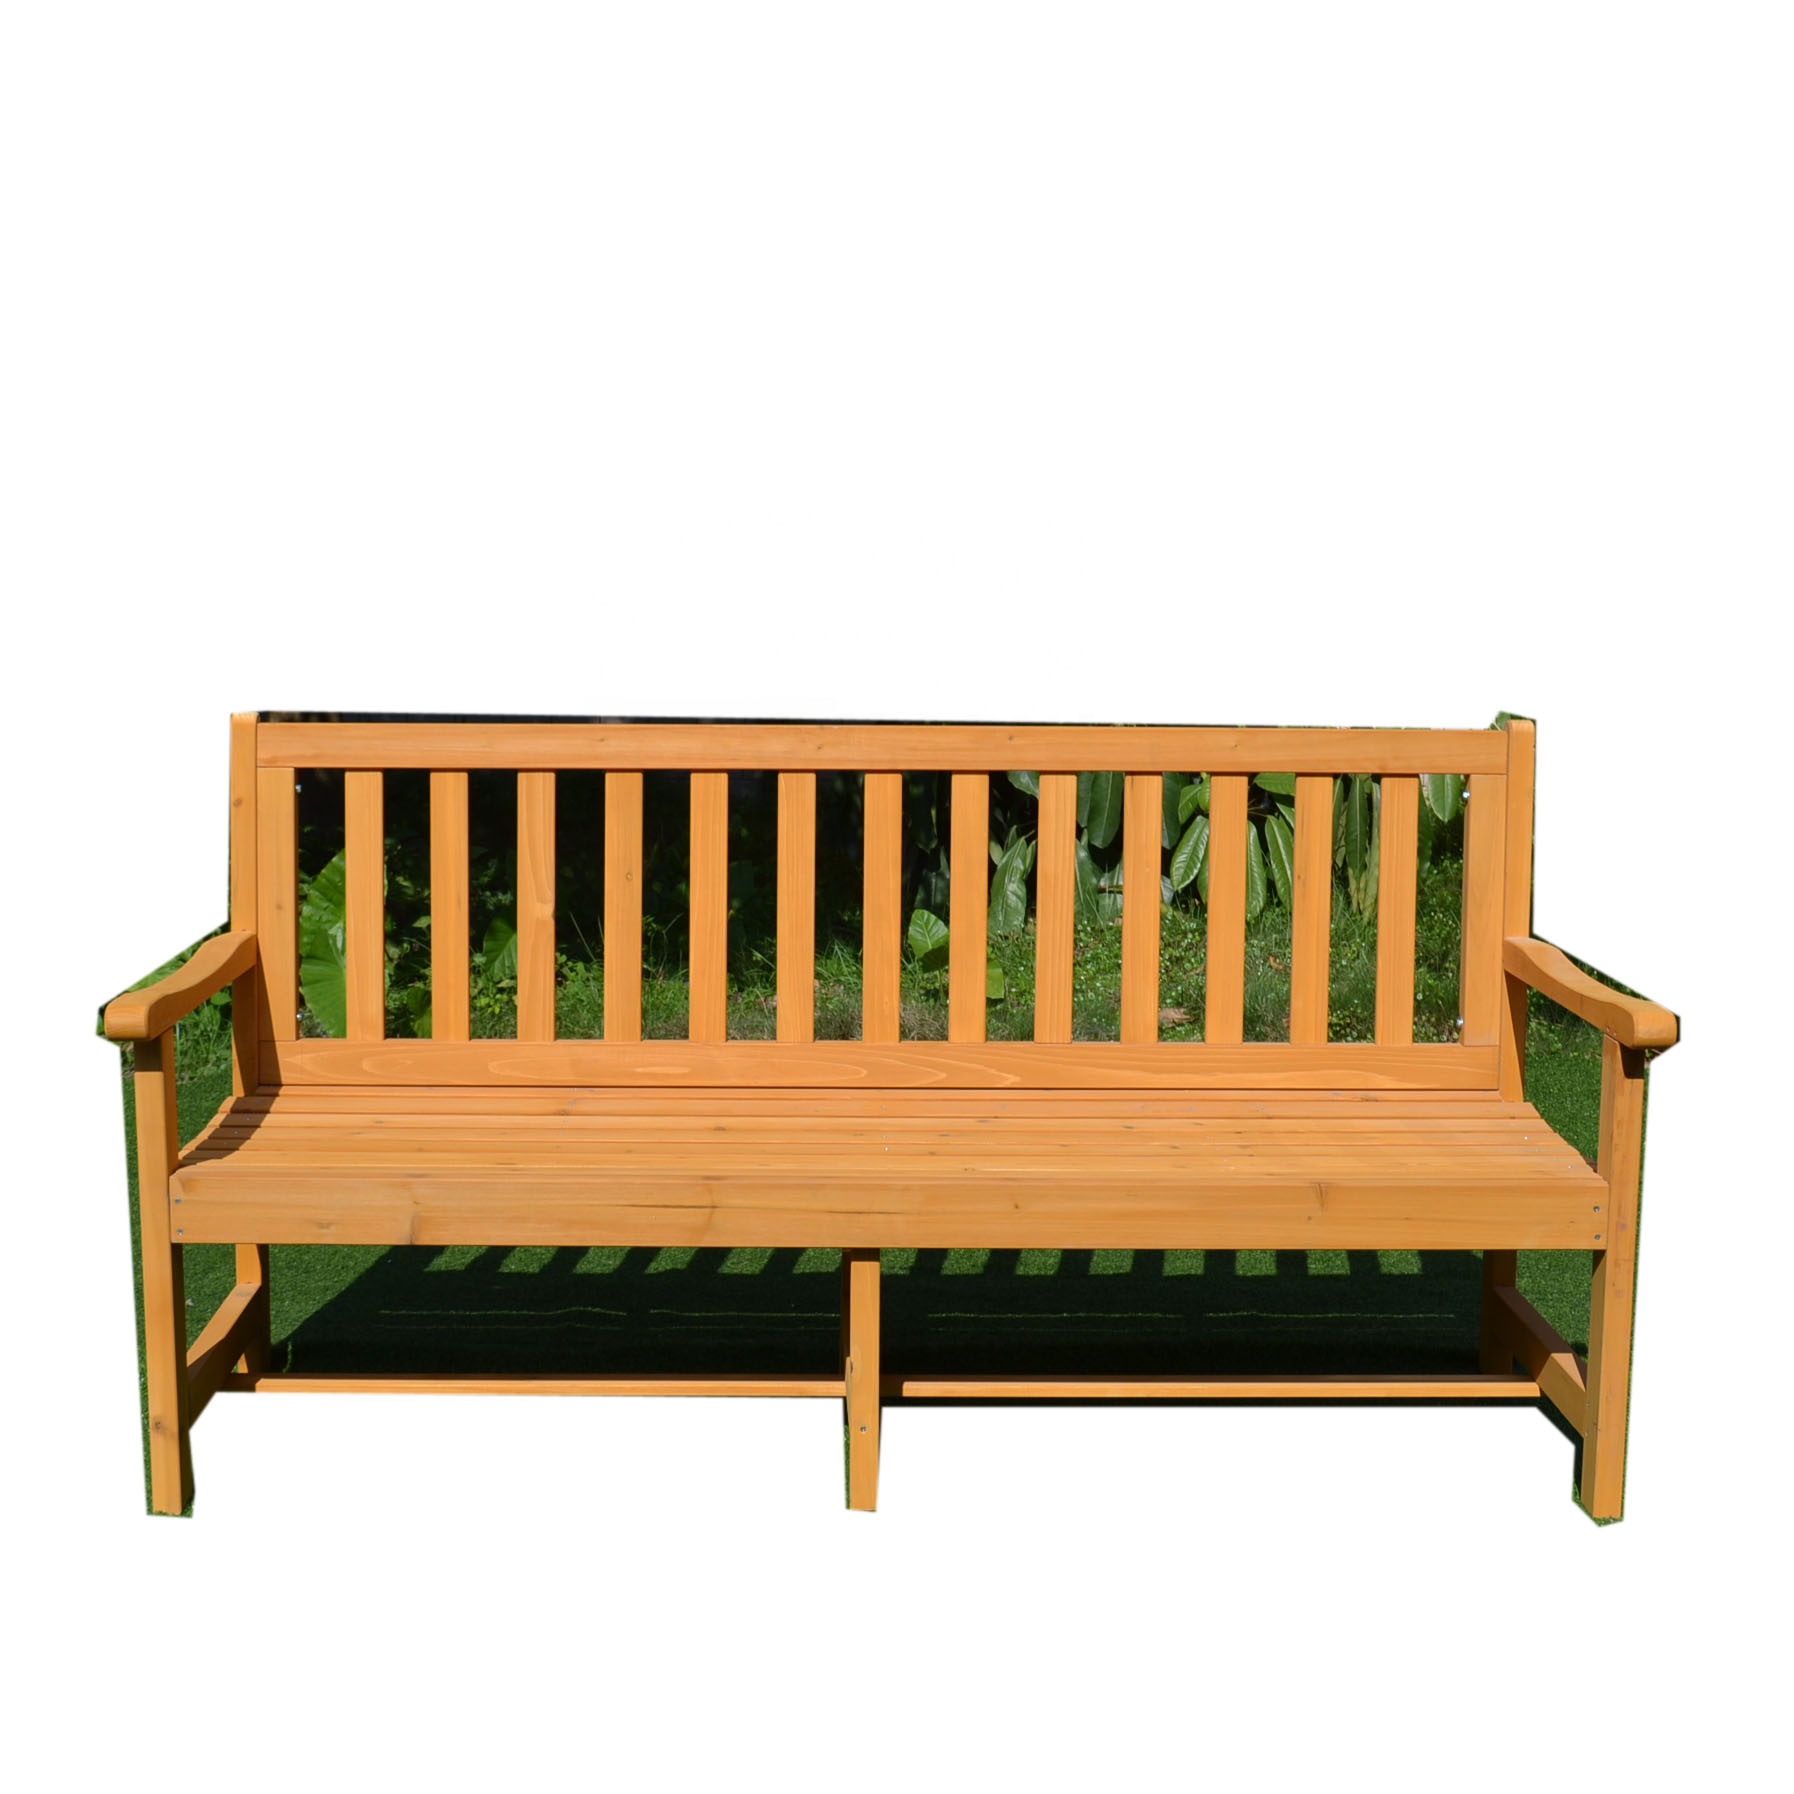 Chair Slat Outdoor Wood Garden Bench chair